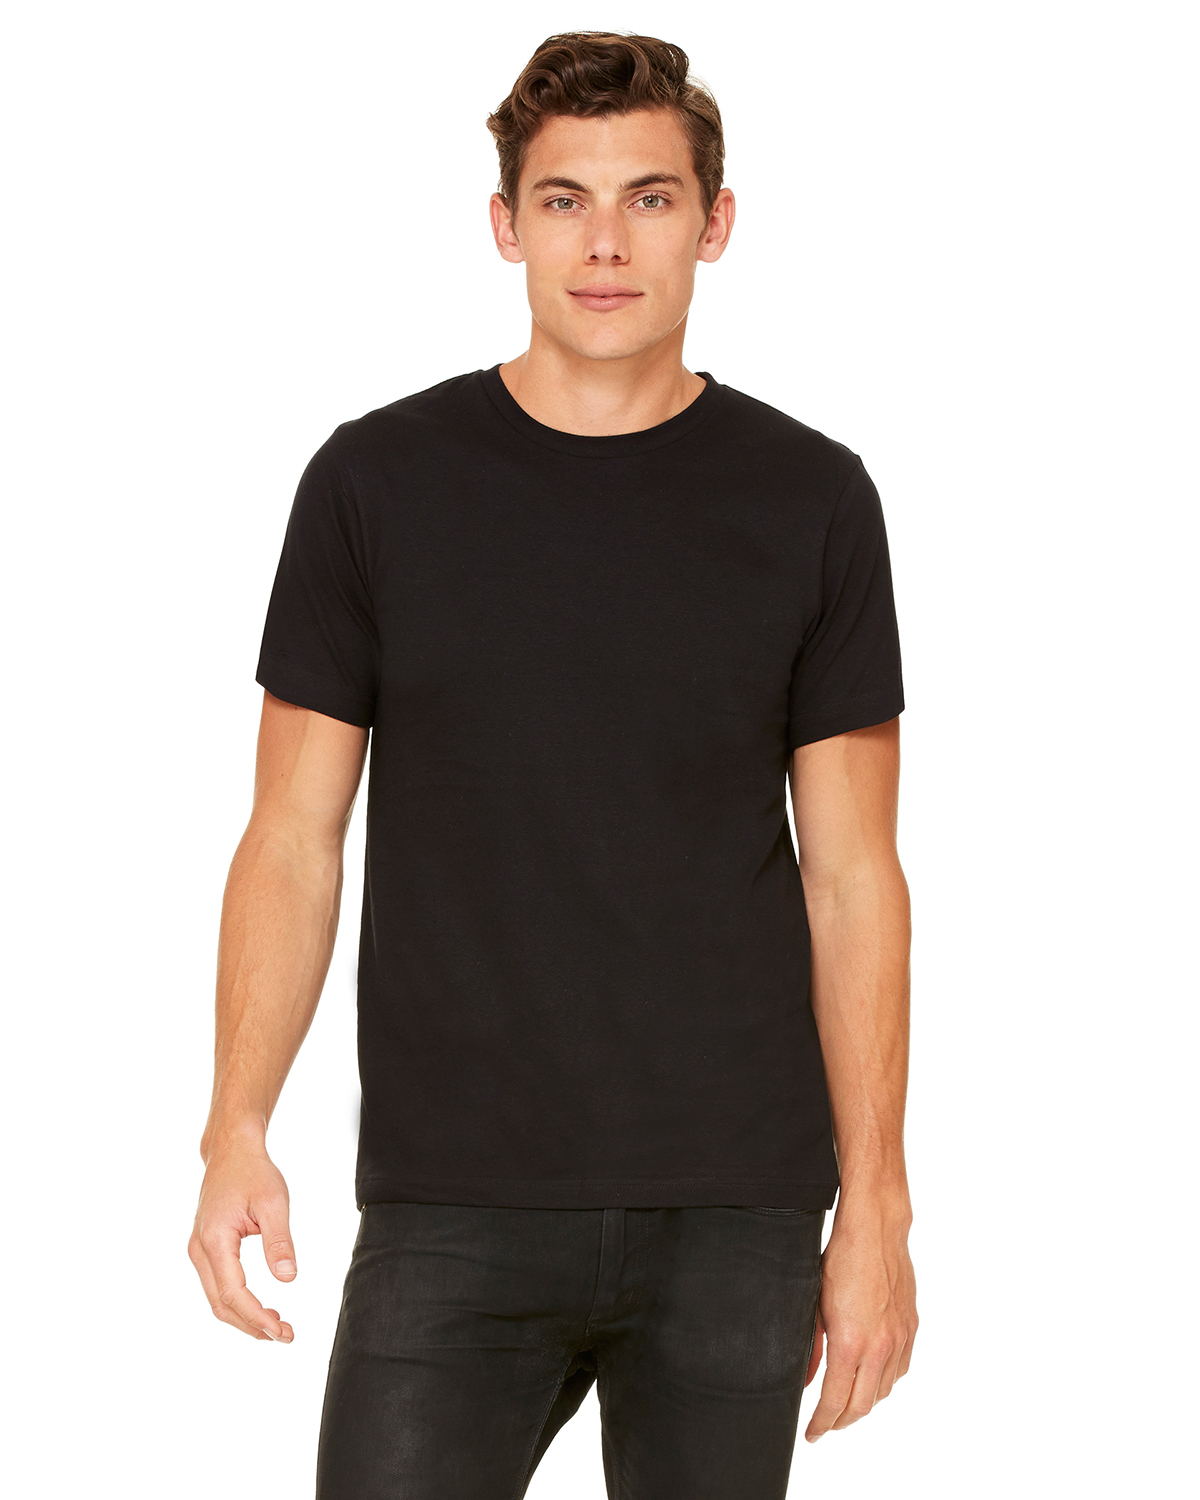 Canvas 3650 - Polyester/Cotton T-Shirt $9.12 - T-Shirts